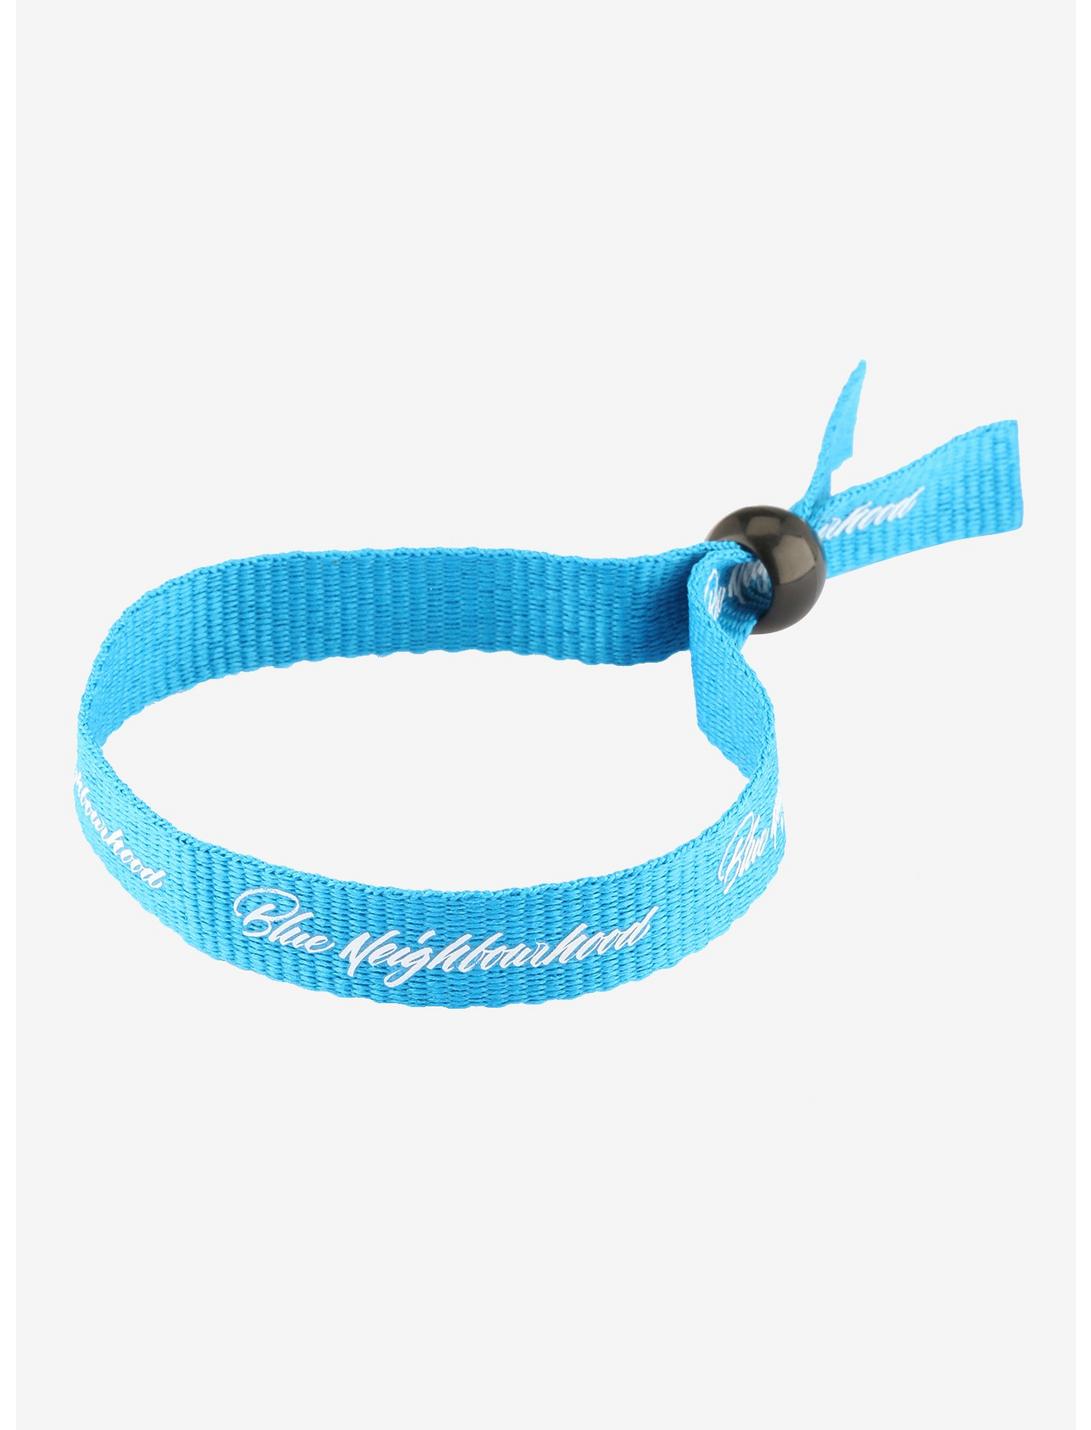 Troye Sivan Blue Neighbourhood Fabric Bracelet, , hi-res